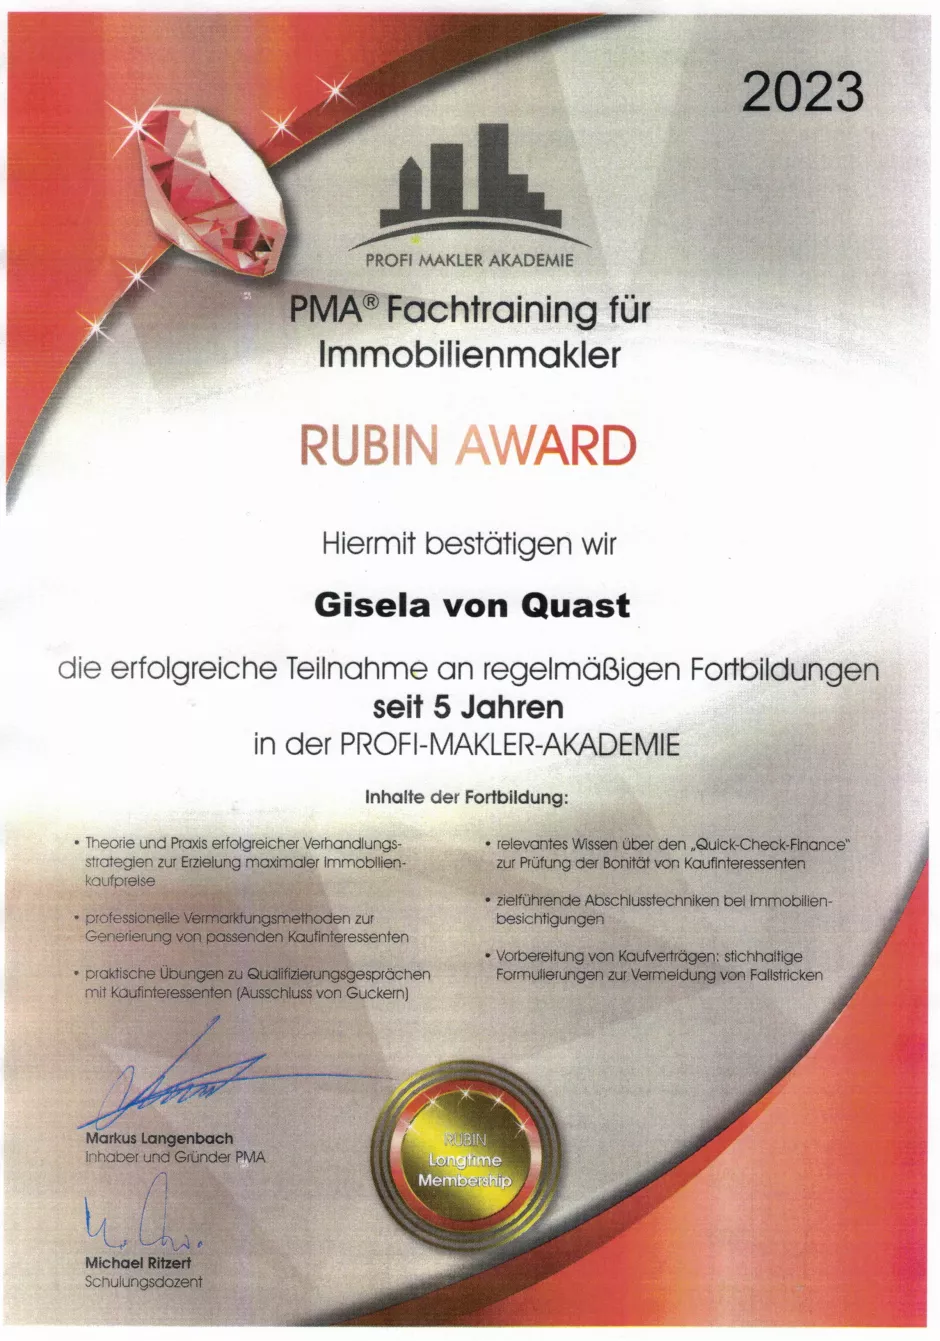 Rubin Award Gisela von Quast